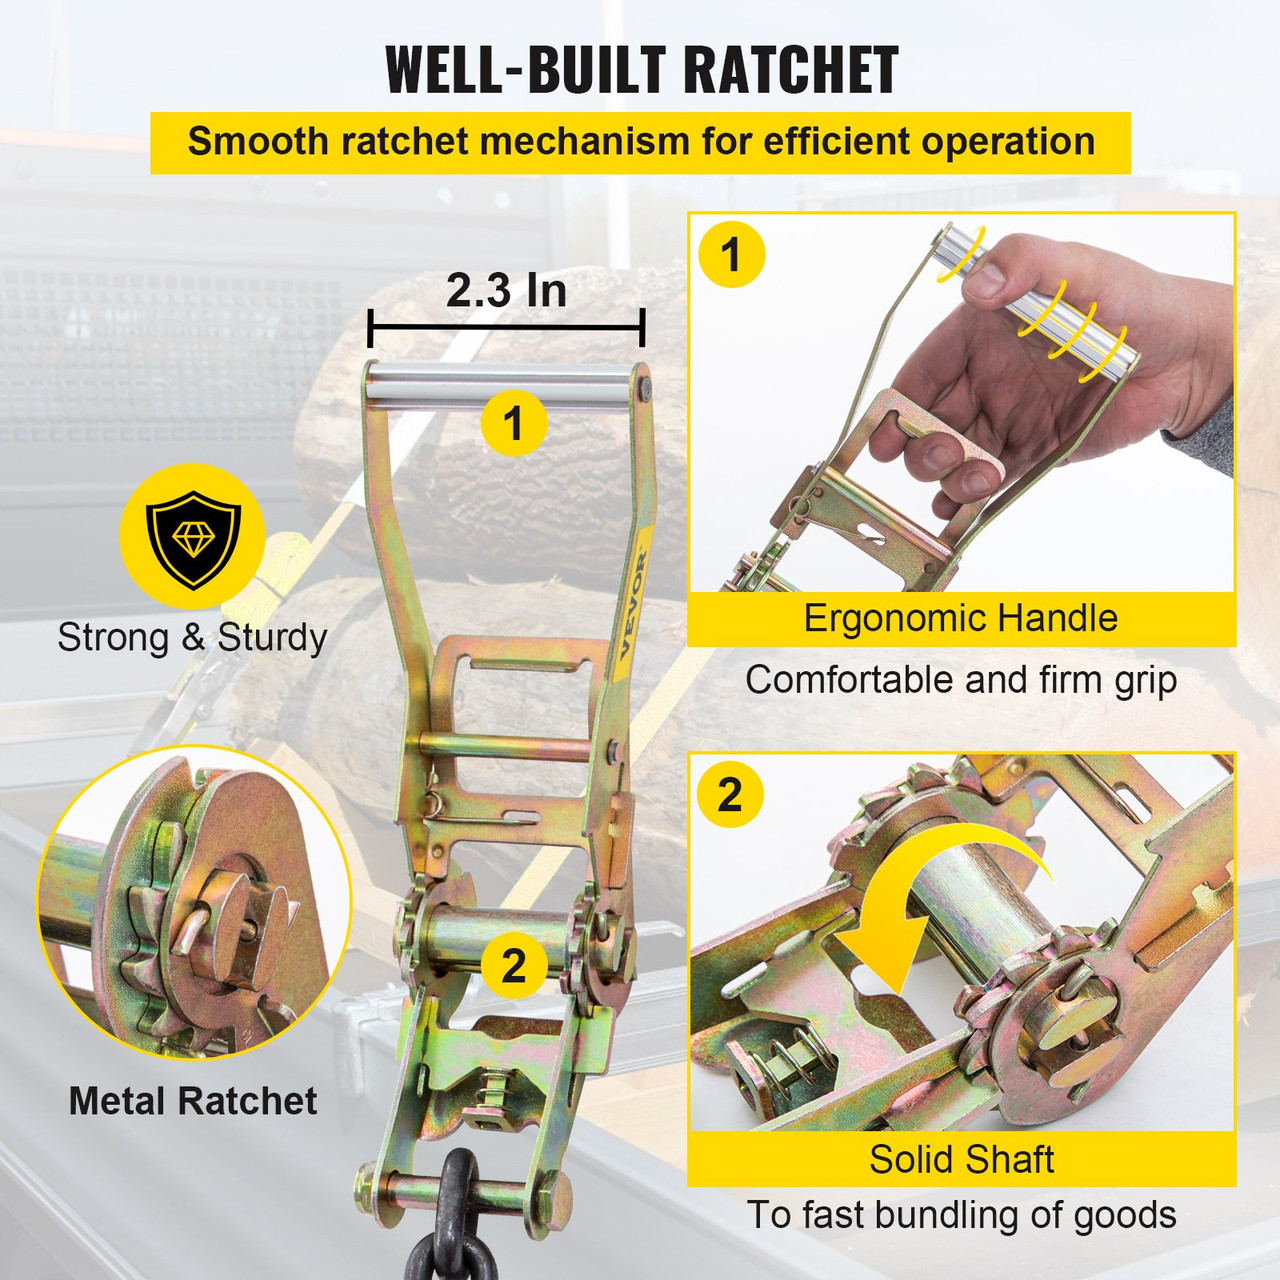 18″ Ladder Strap for 1 ratchet: Softer/Flexible